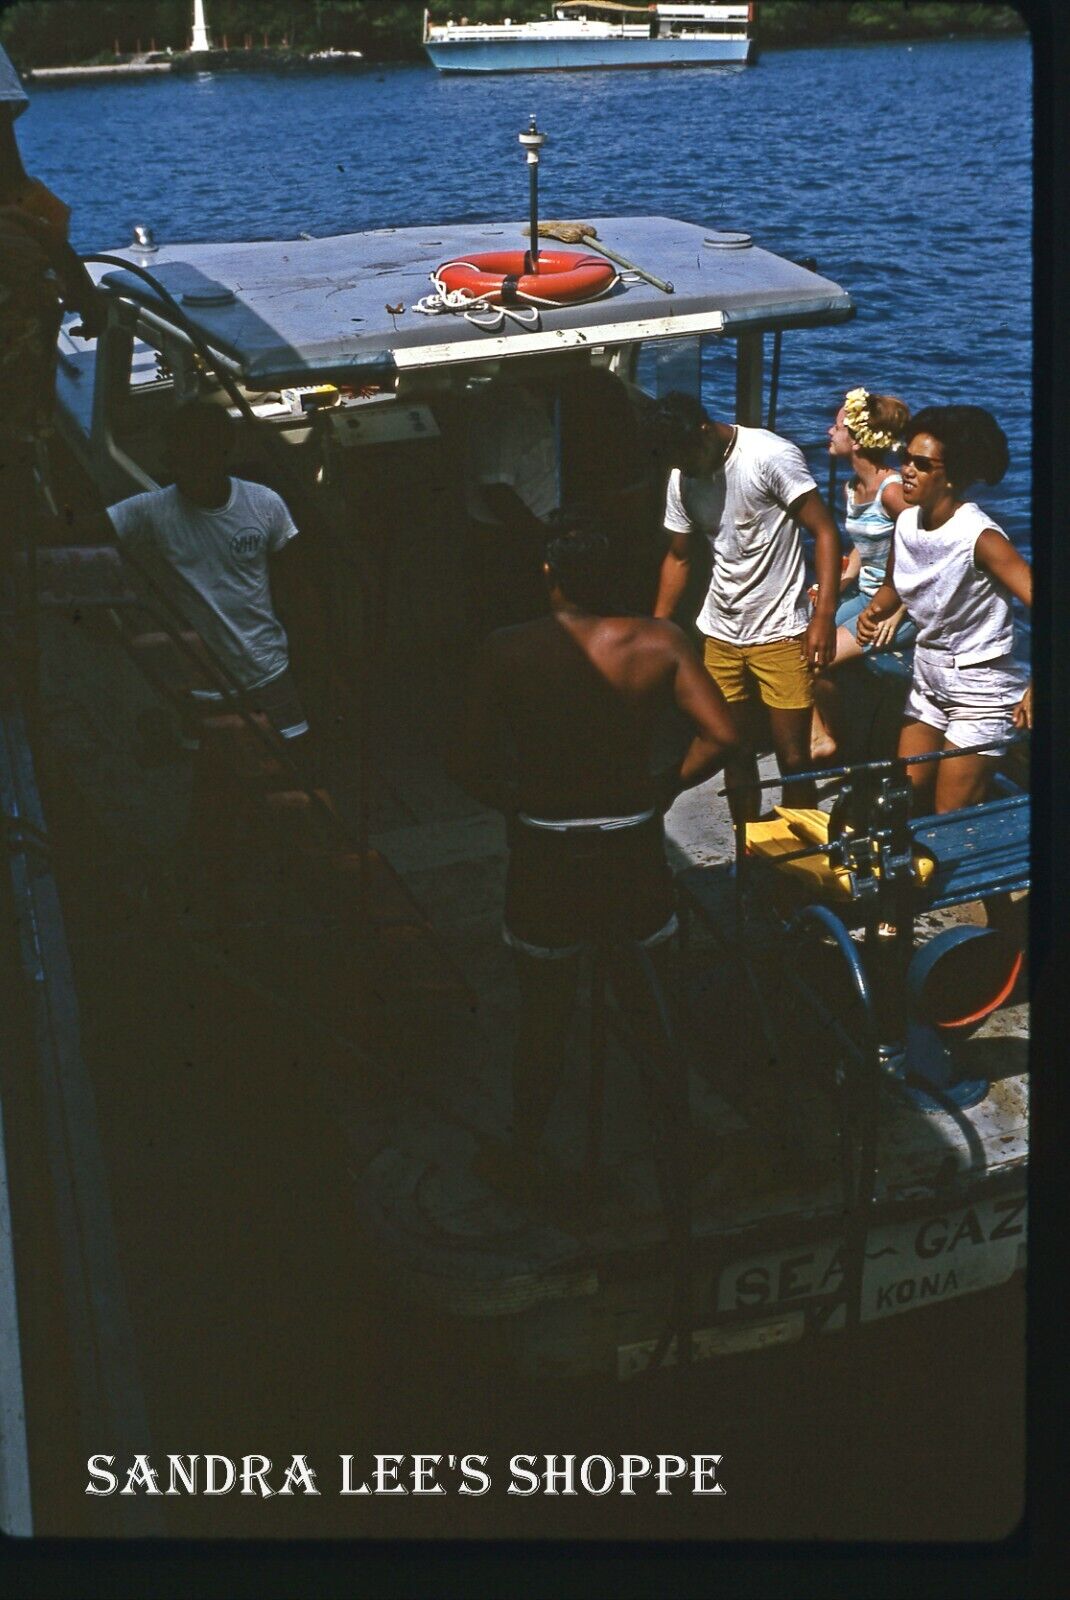 Kodak Slide 1966 Big Island Hawaii Kealakekua Bay People on Small Boat #398